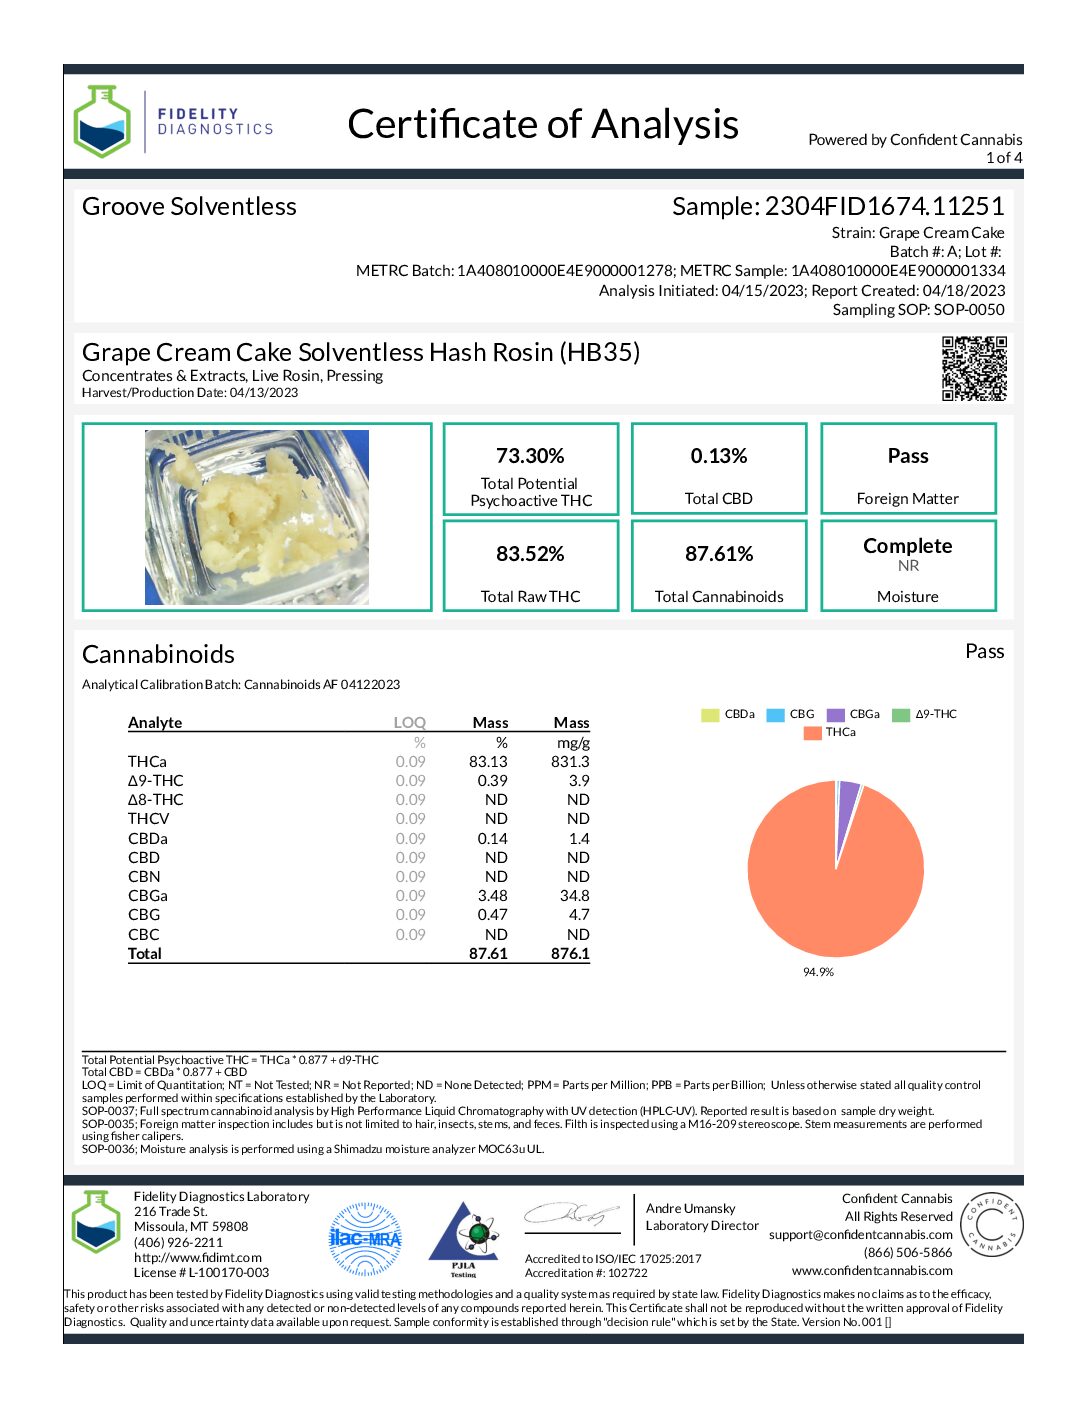 https://groovesolventless.com/wp-content/uploads/2023/04/Grape-Cream-Cake-Solventless-Hash-Rosin-HB35-pdf.jpg